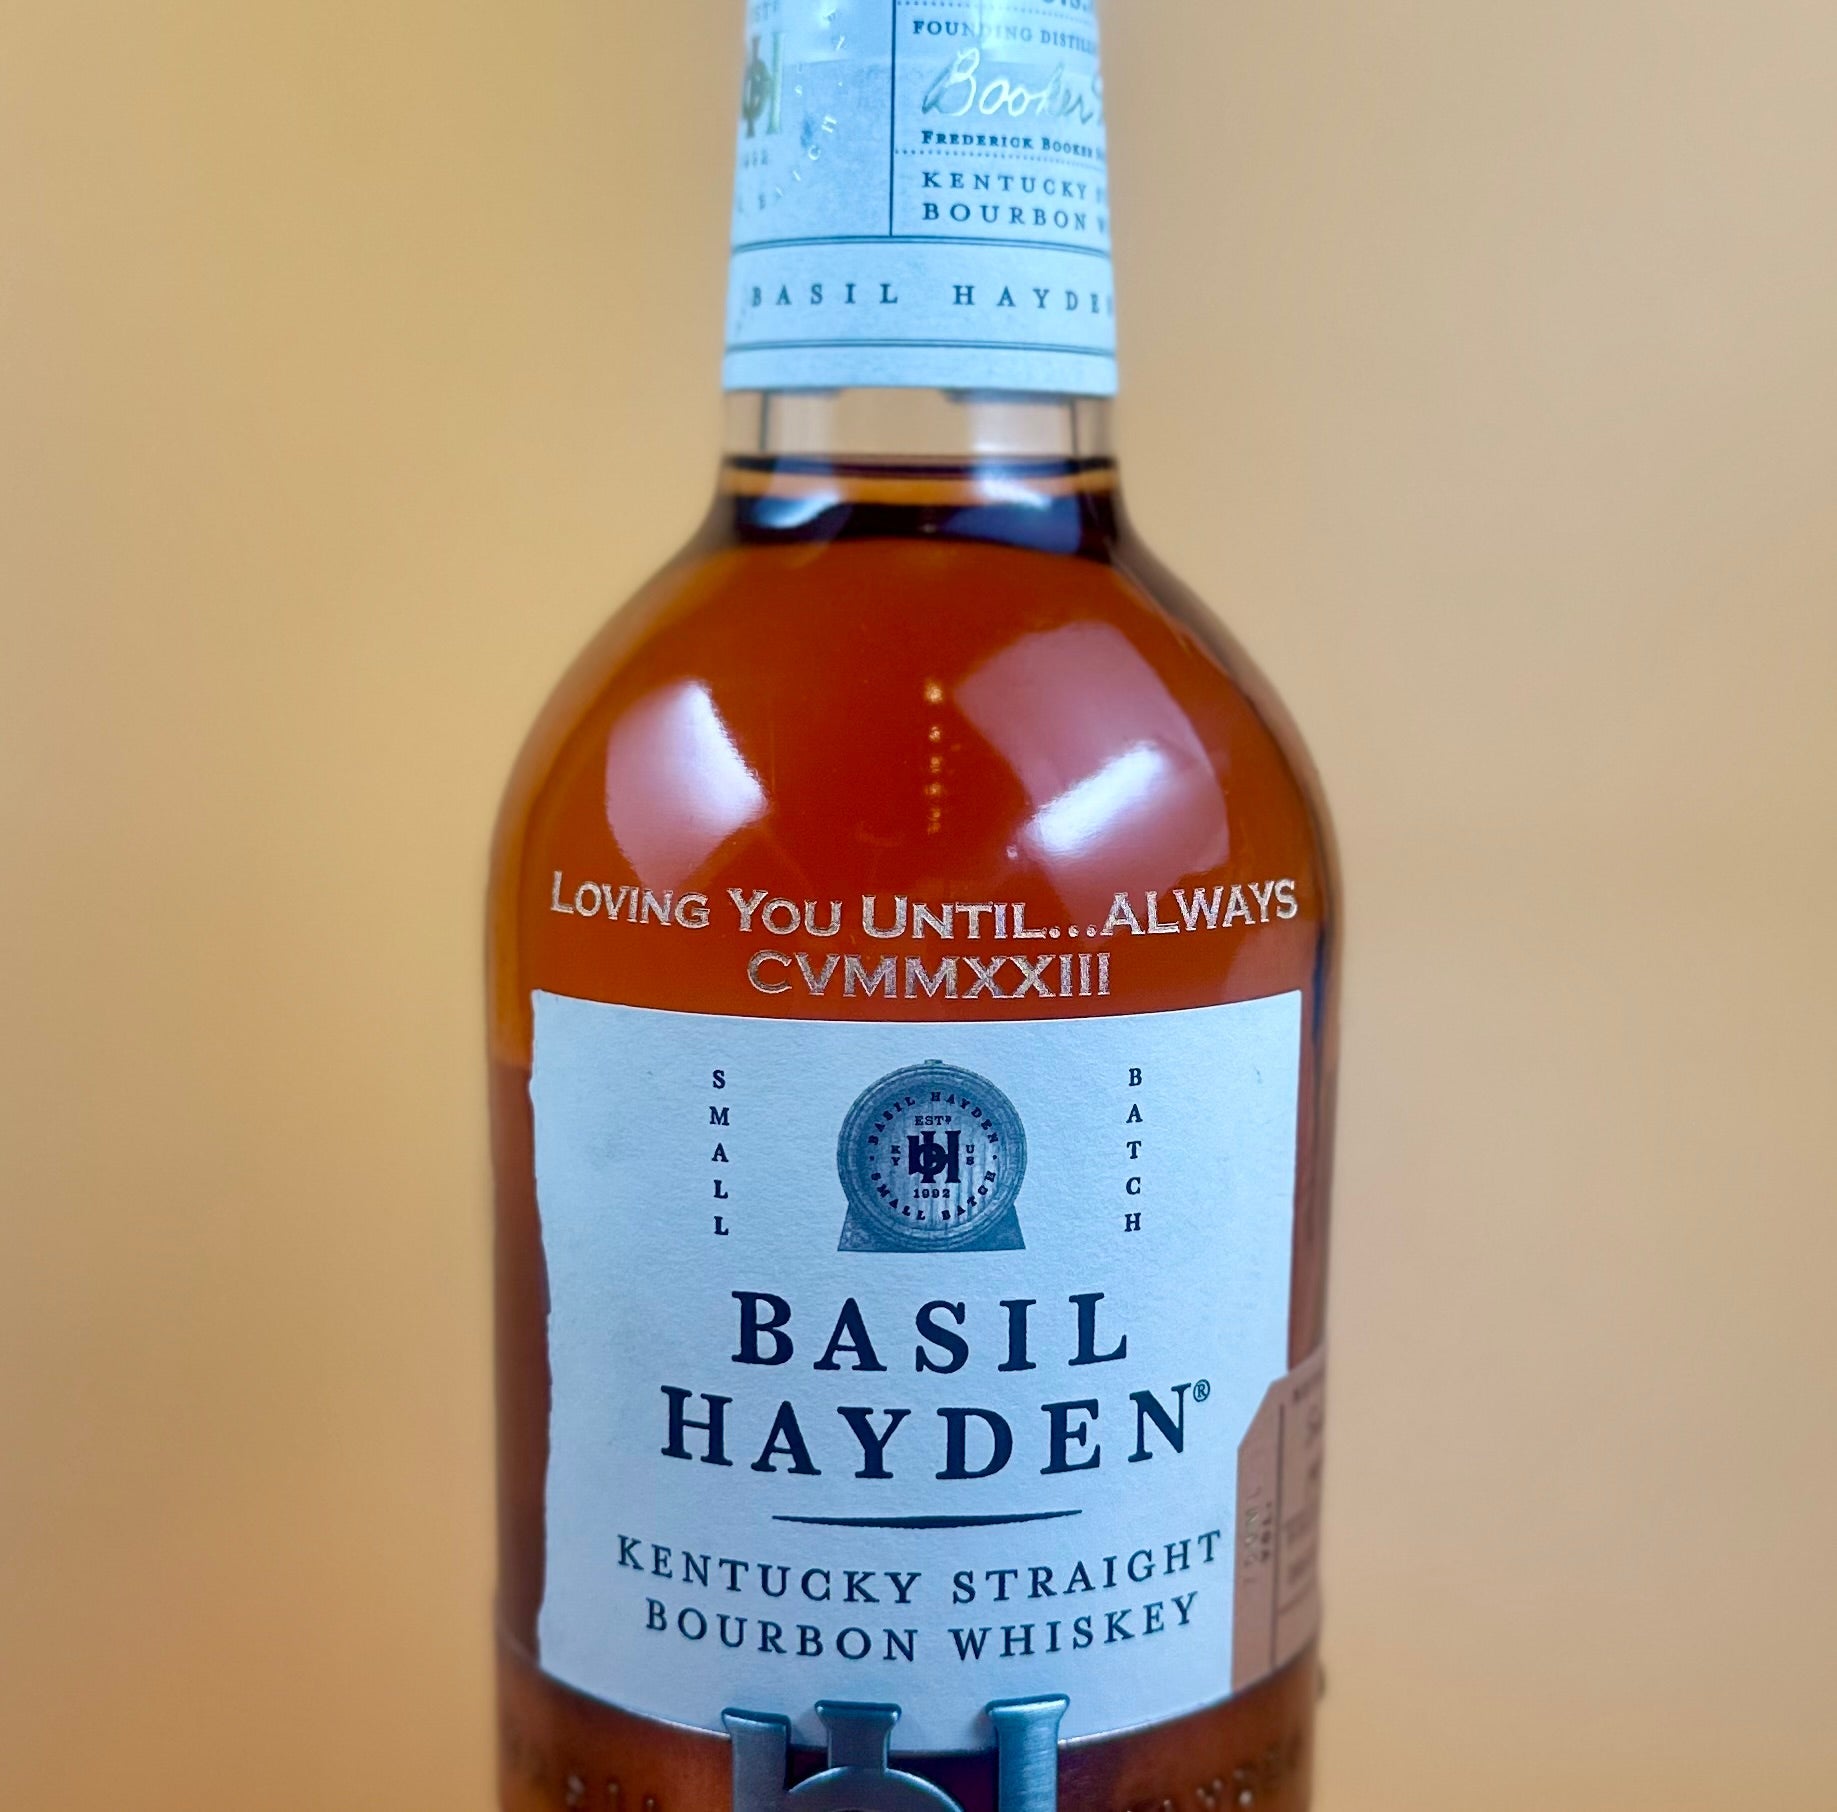 Basil Hayden 10 Year Old Kentucky Straight Bourbon Whiskey - Bottle Engraving